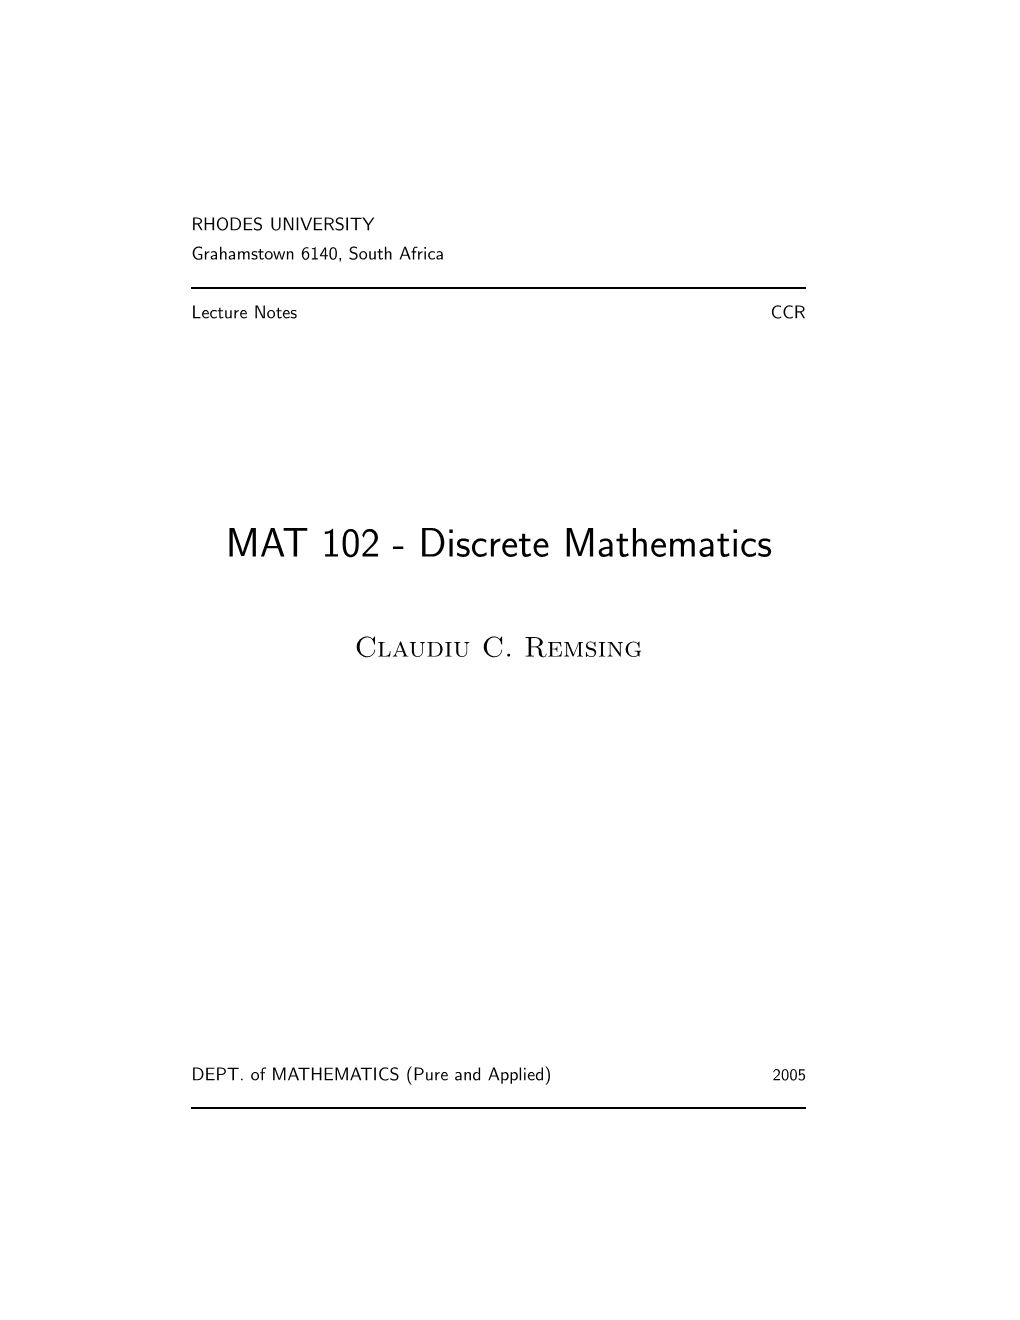 MAT 102 - Discrete Mathematics